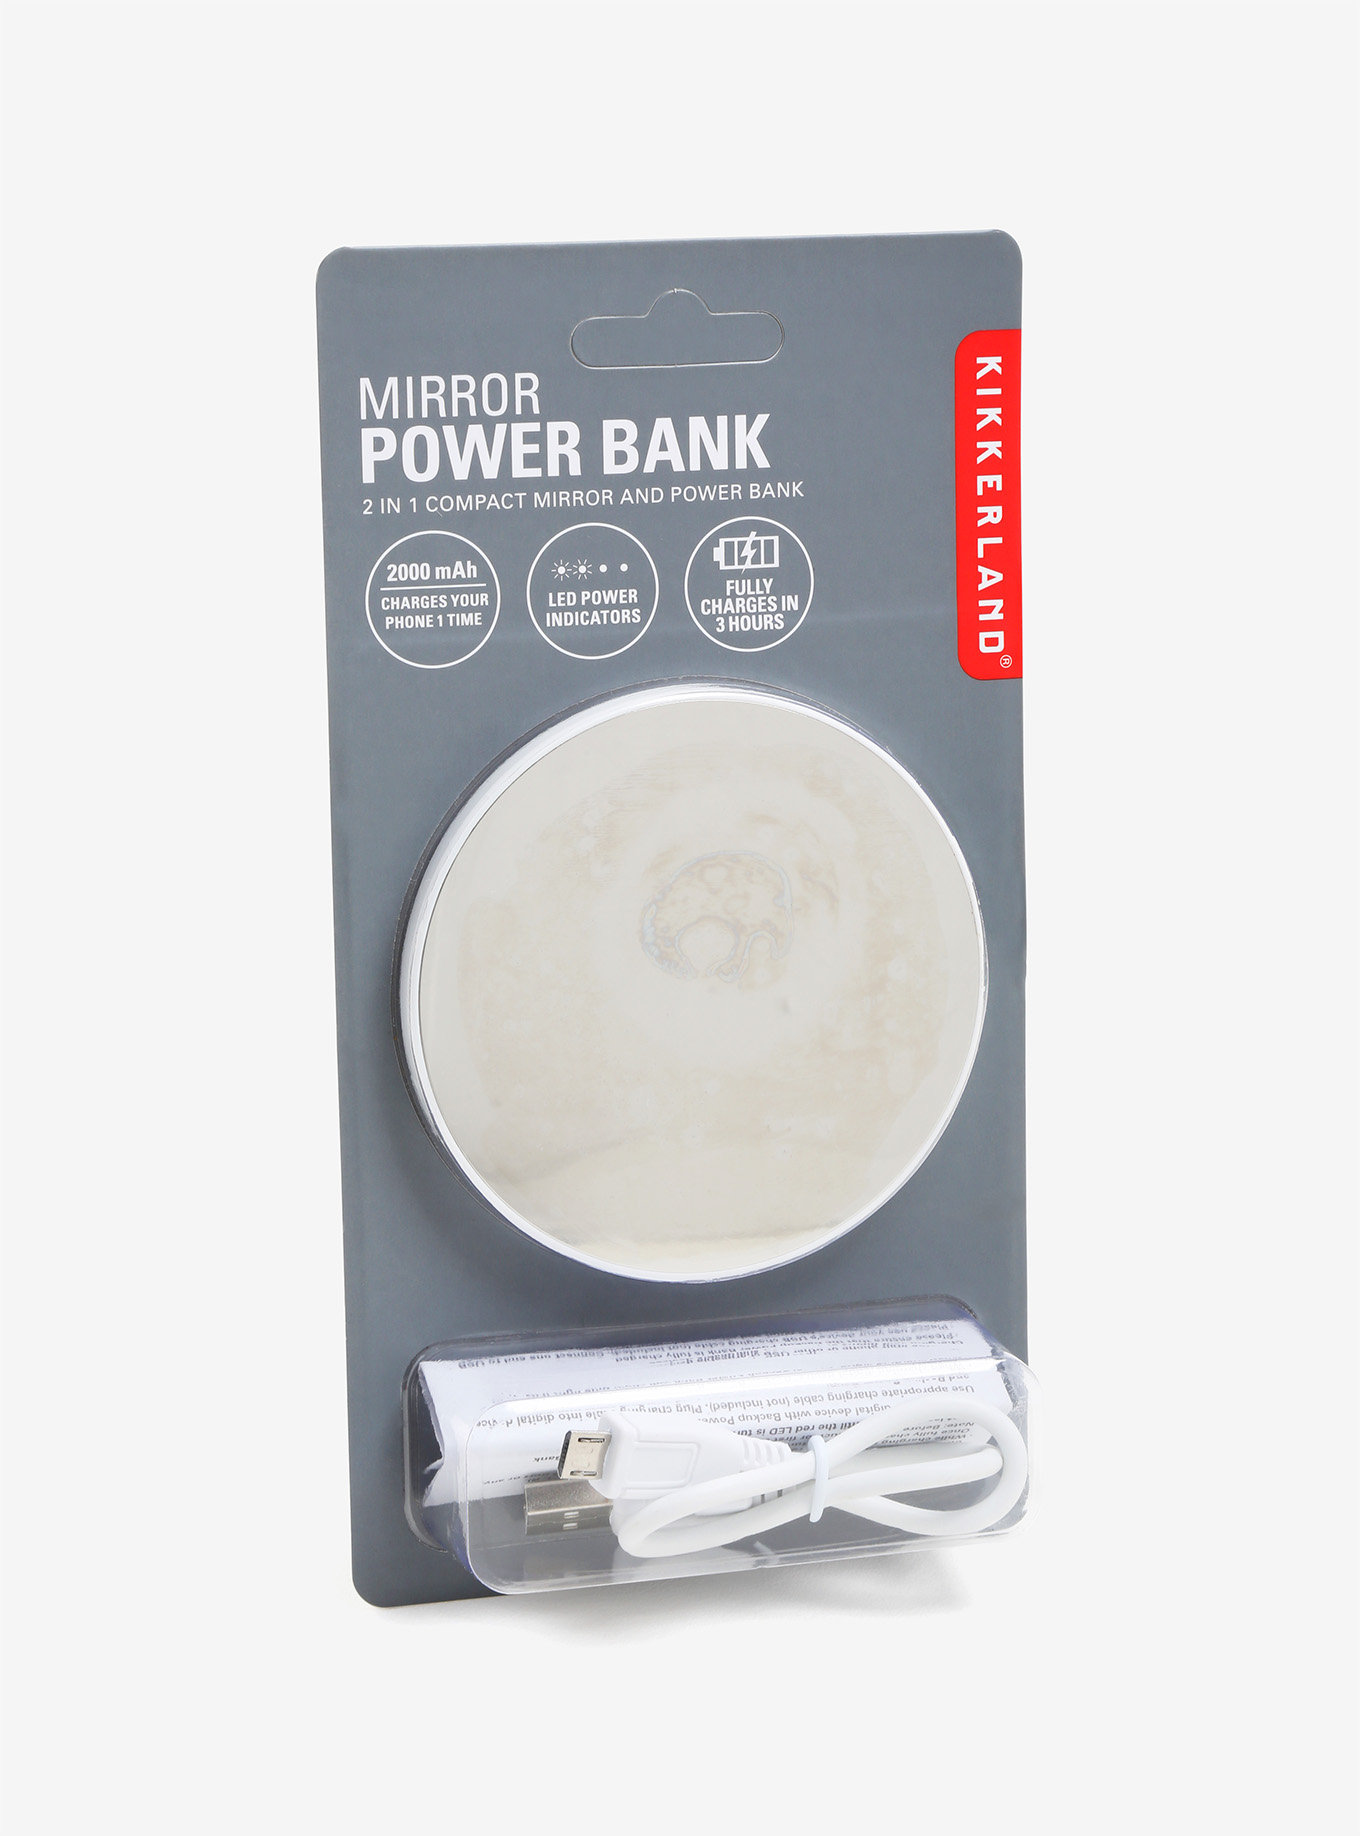 Mirror power bank.jpg